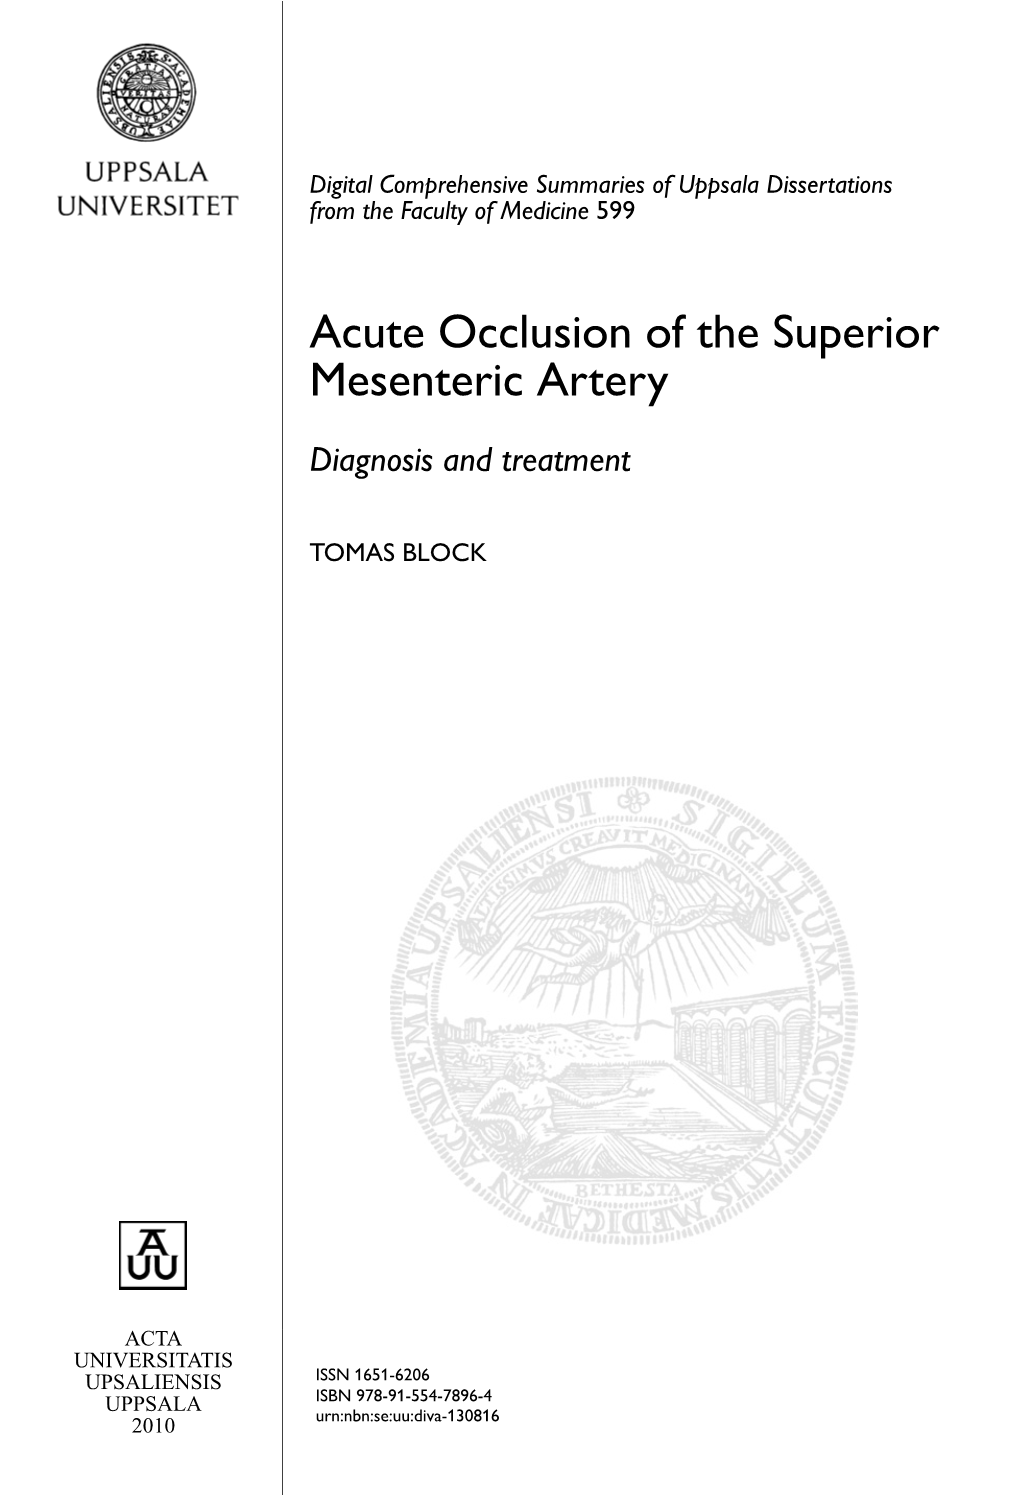 Acute Occlusion of the Superior Mesenteric Artery